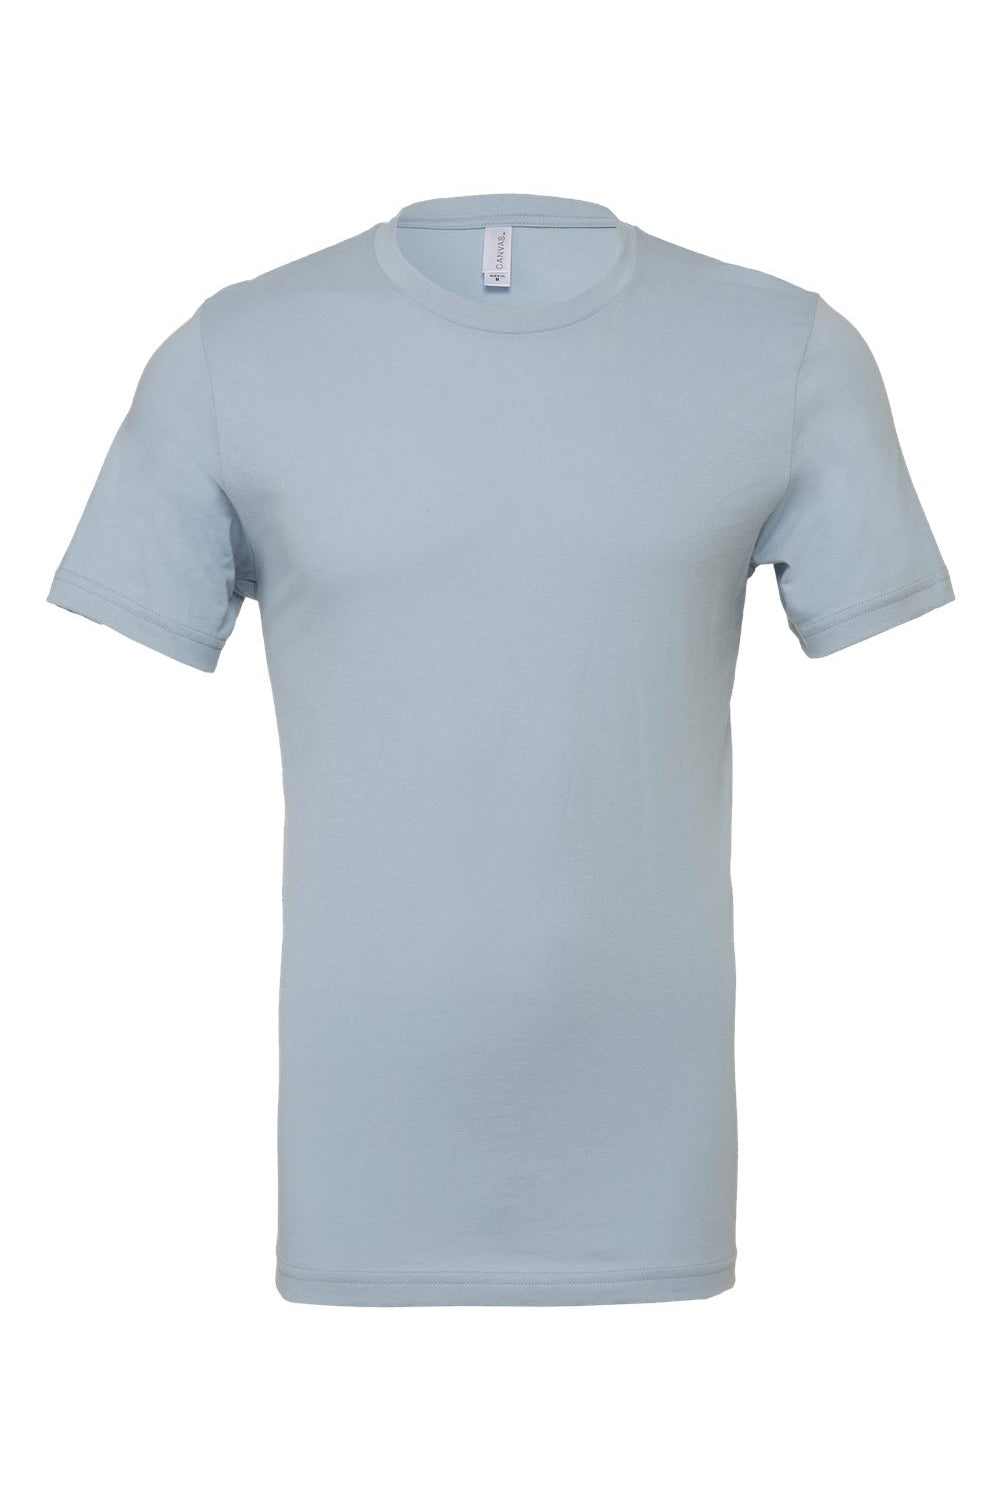 Bella + Canvas BC3001/3001C Mens Jersey Short Sleeve Crewneck T-Shirt Light Blue Flat Front